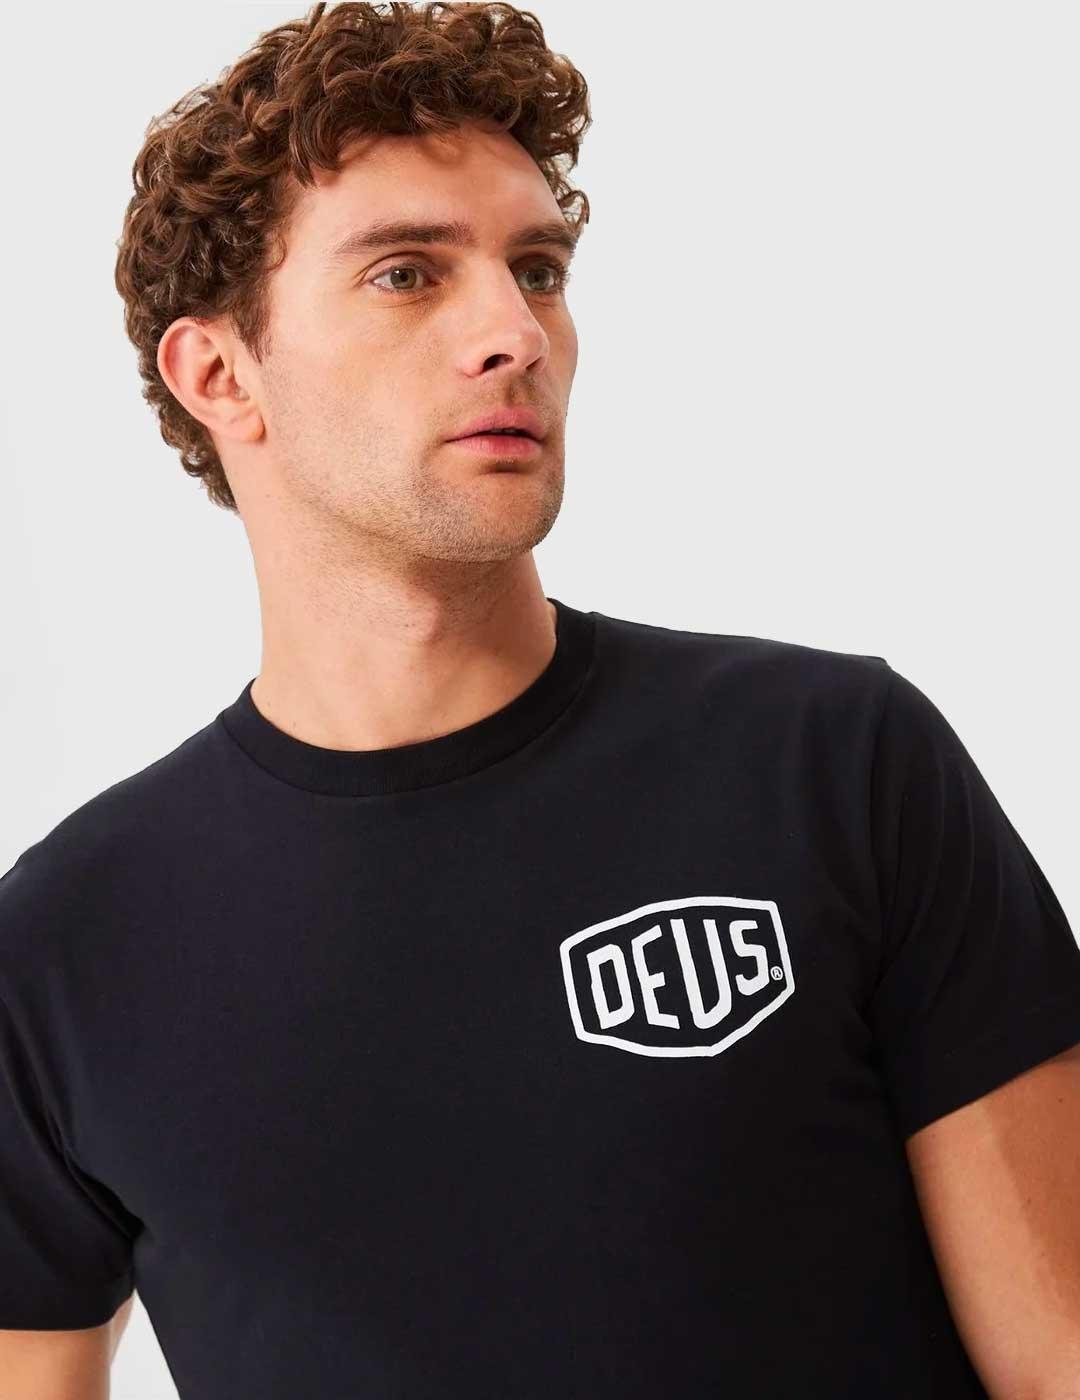 Camiseta Deus Ex Machina Berlin Address negra para hombre